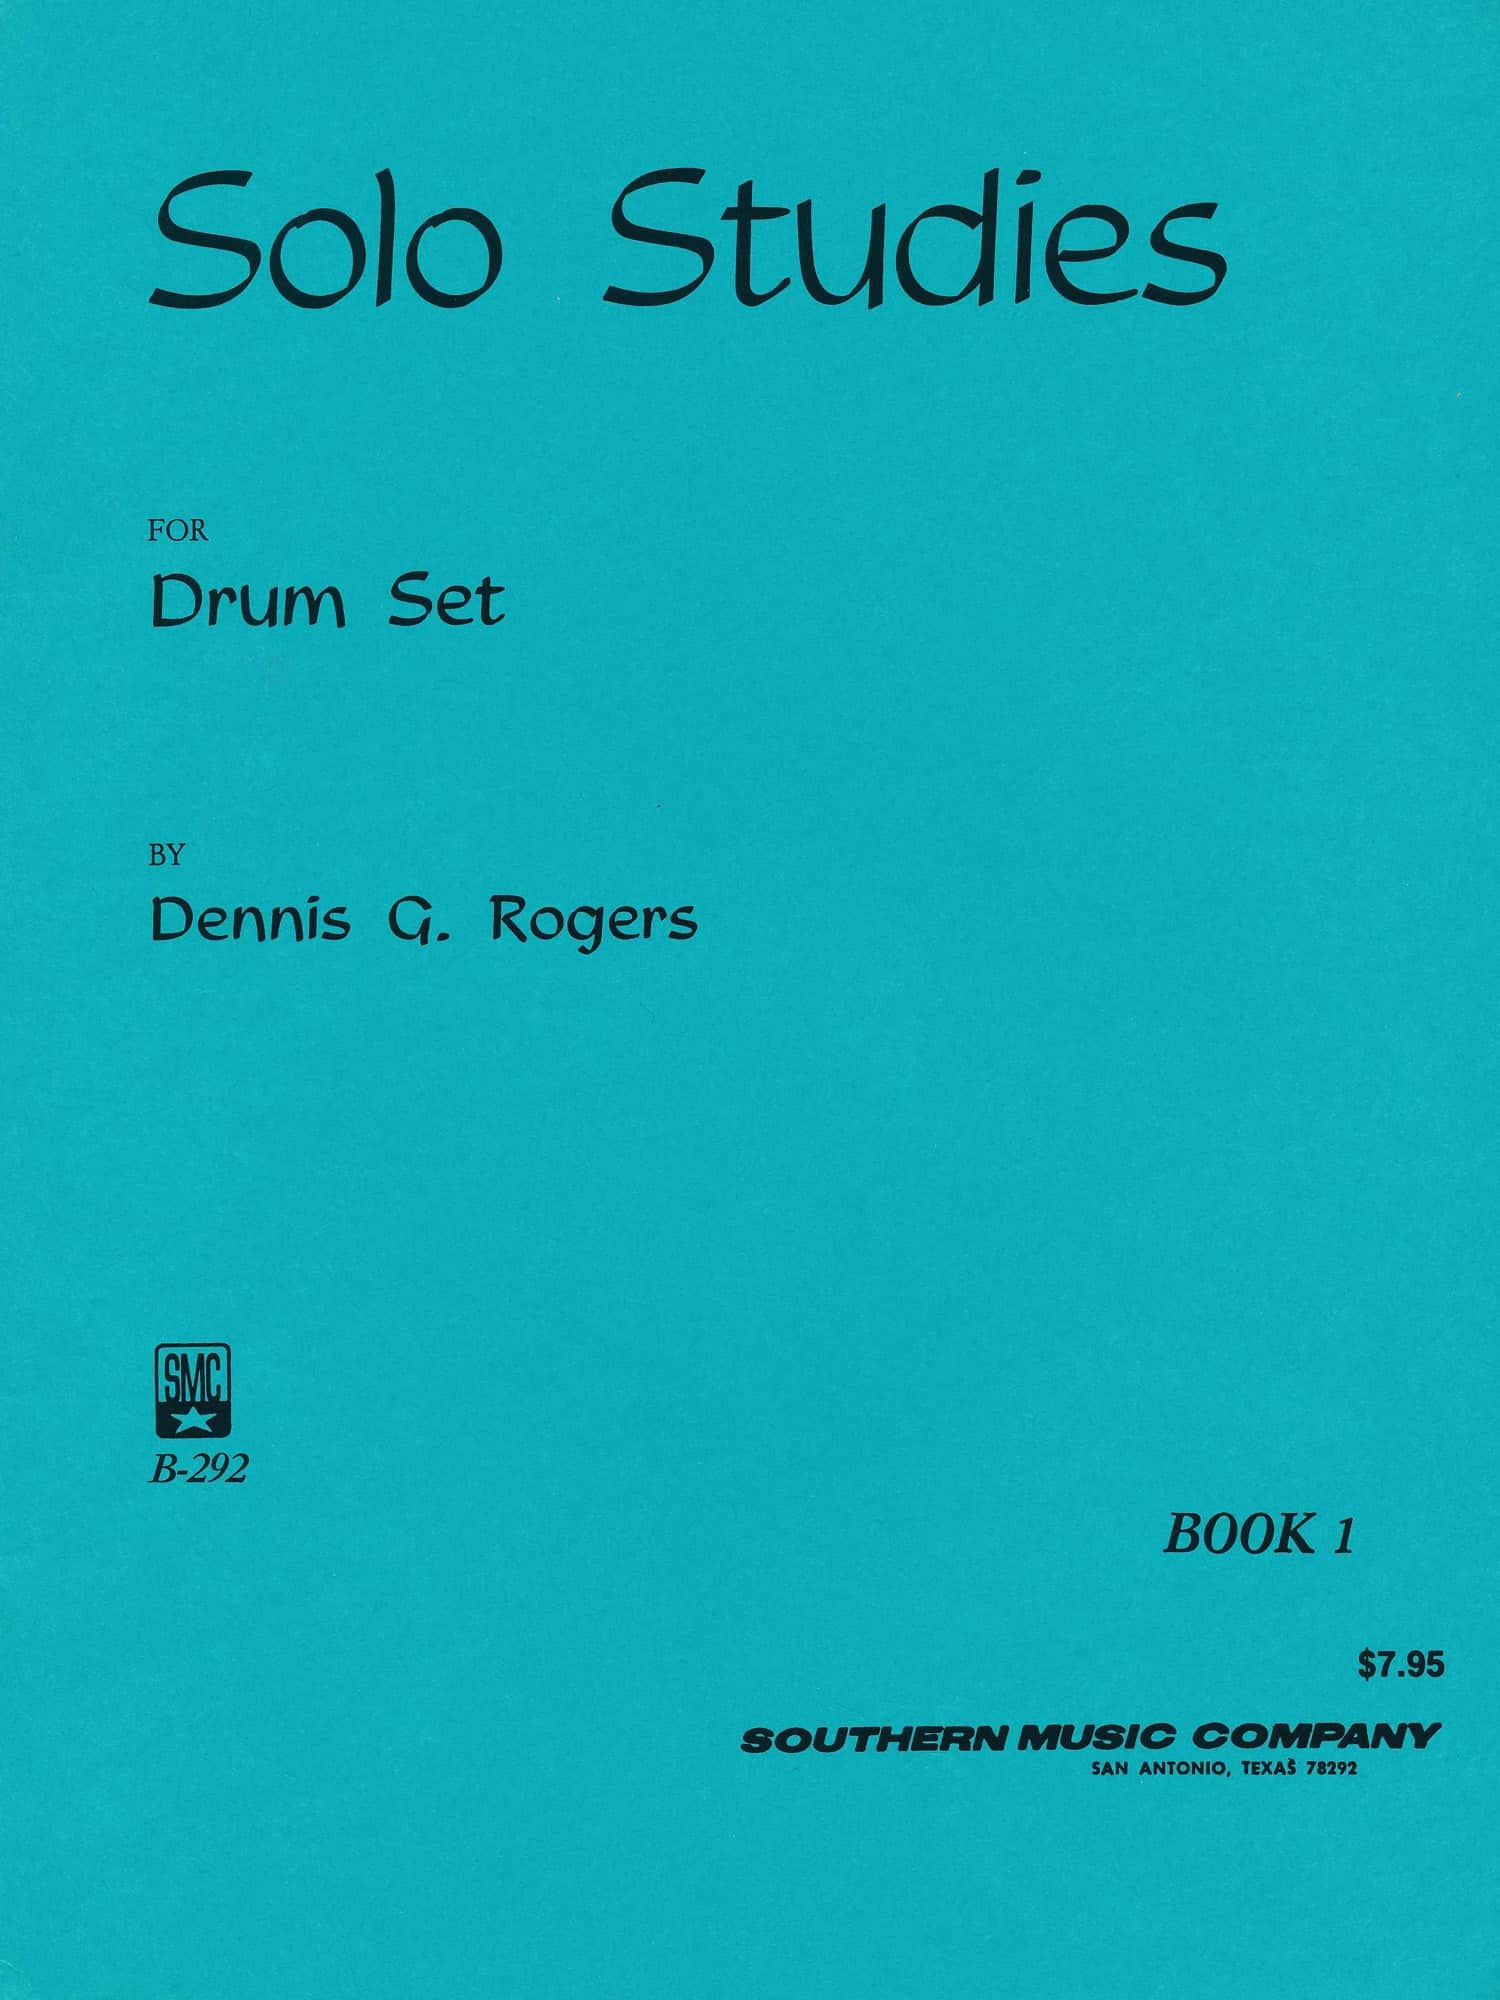 Solo Studies - book 1